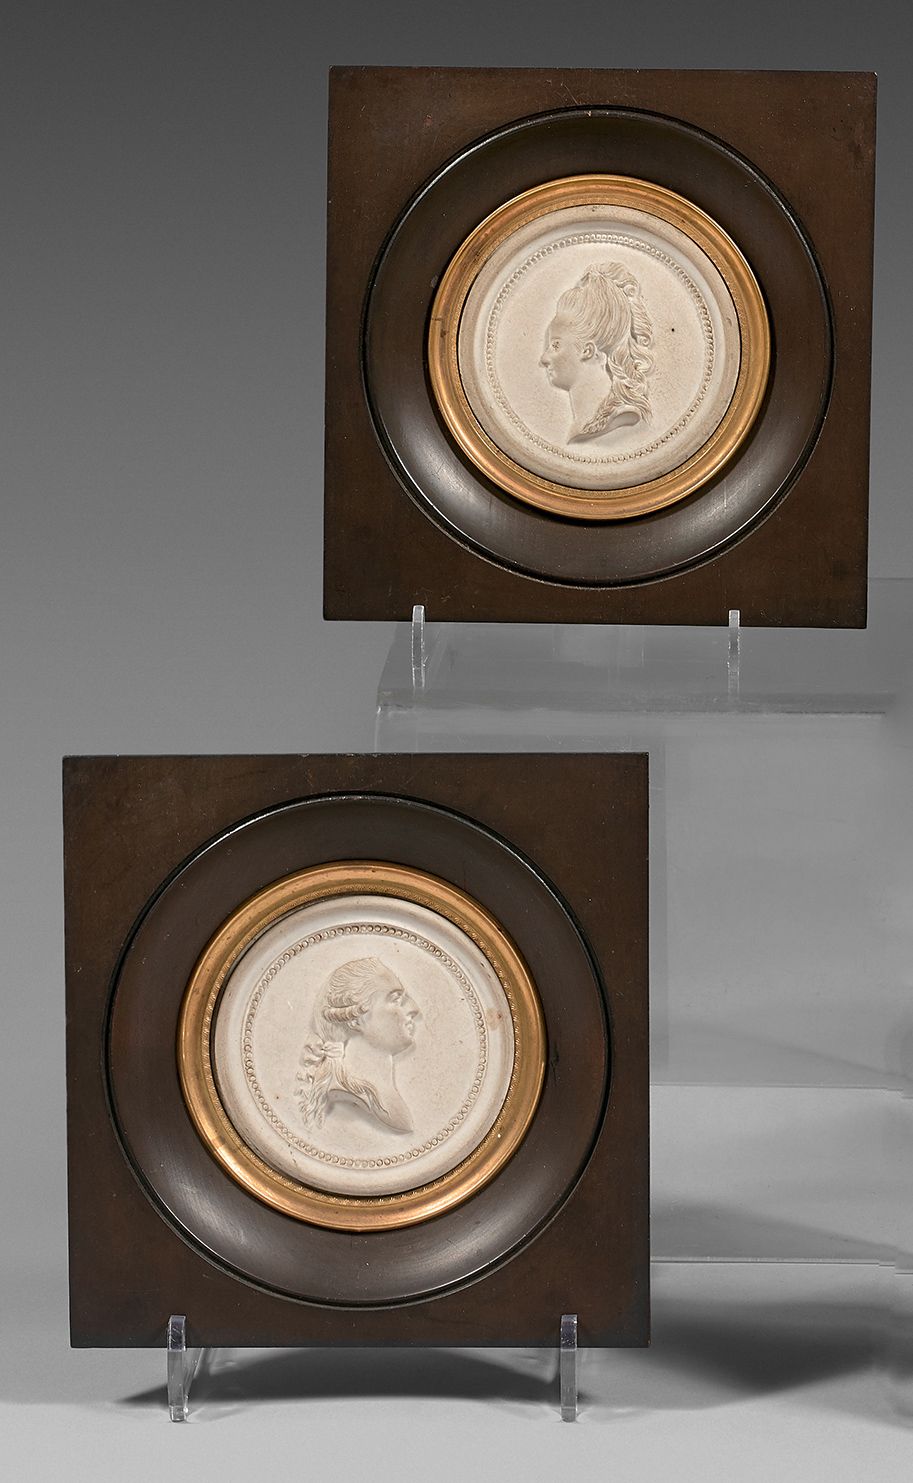 Null Pareja de medallones de porcelana del siglo XVIII, probablemente de Sèvres
&hellip;